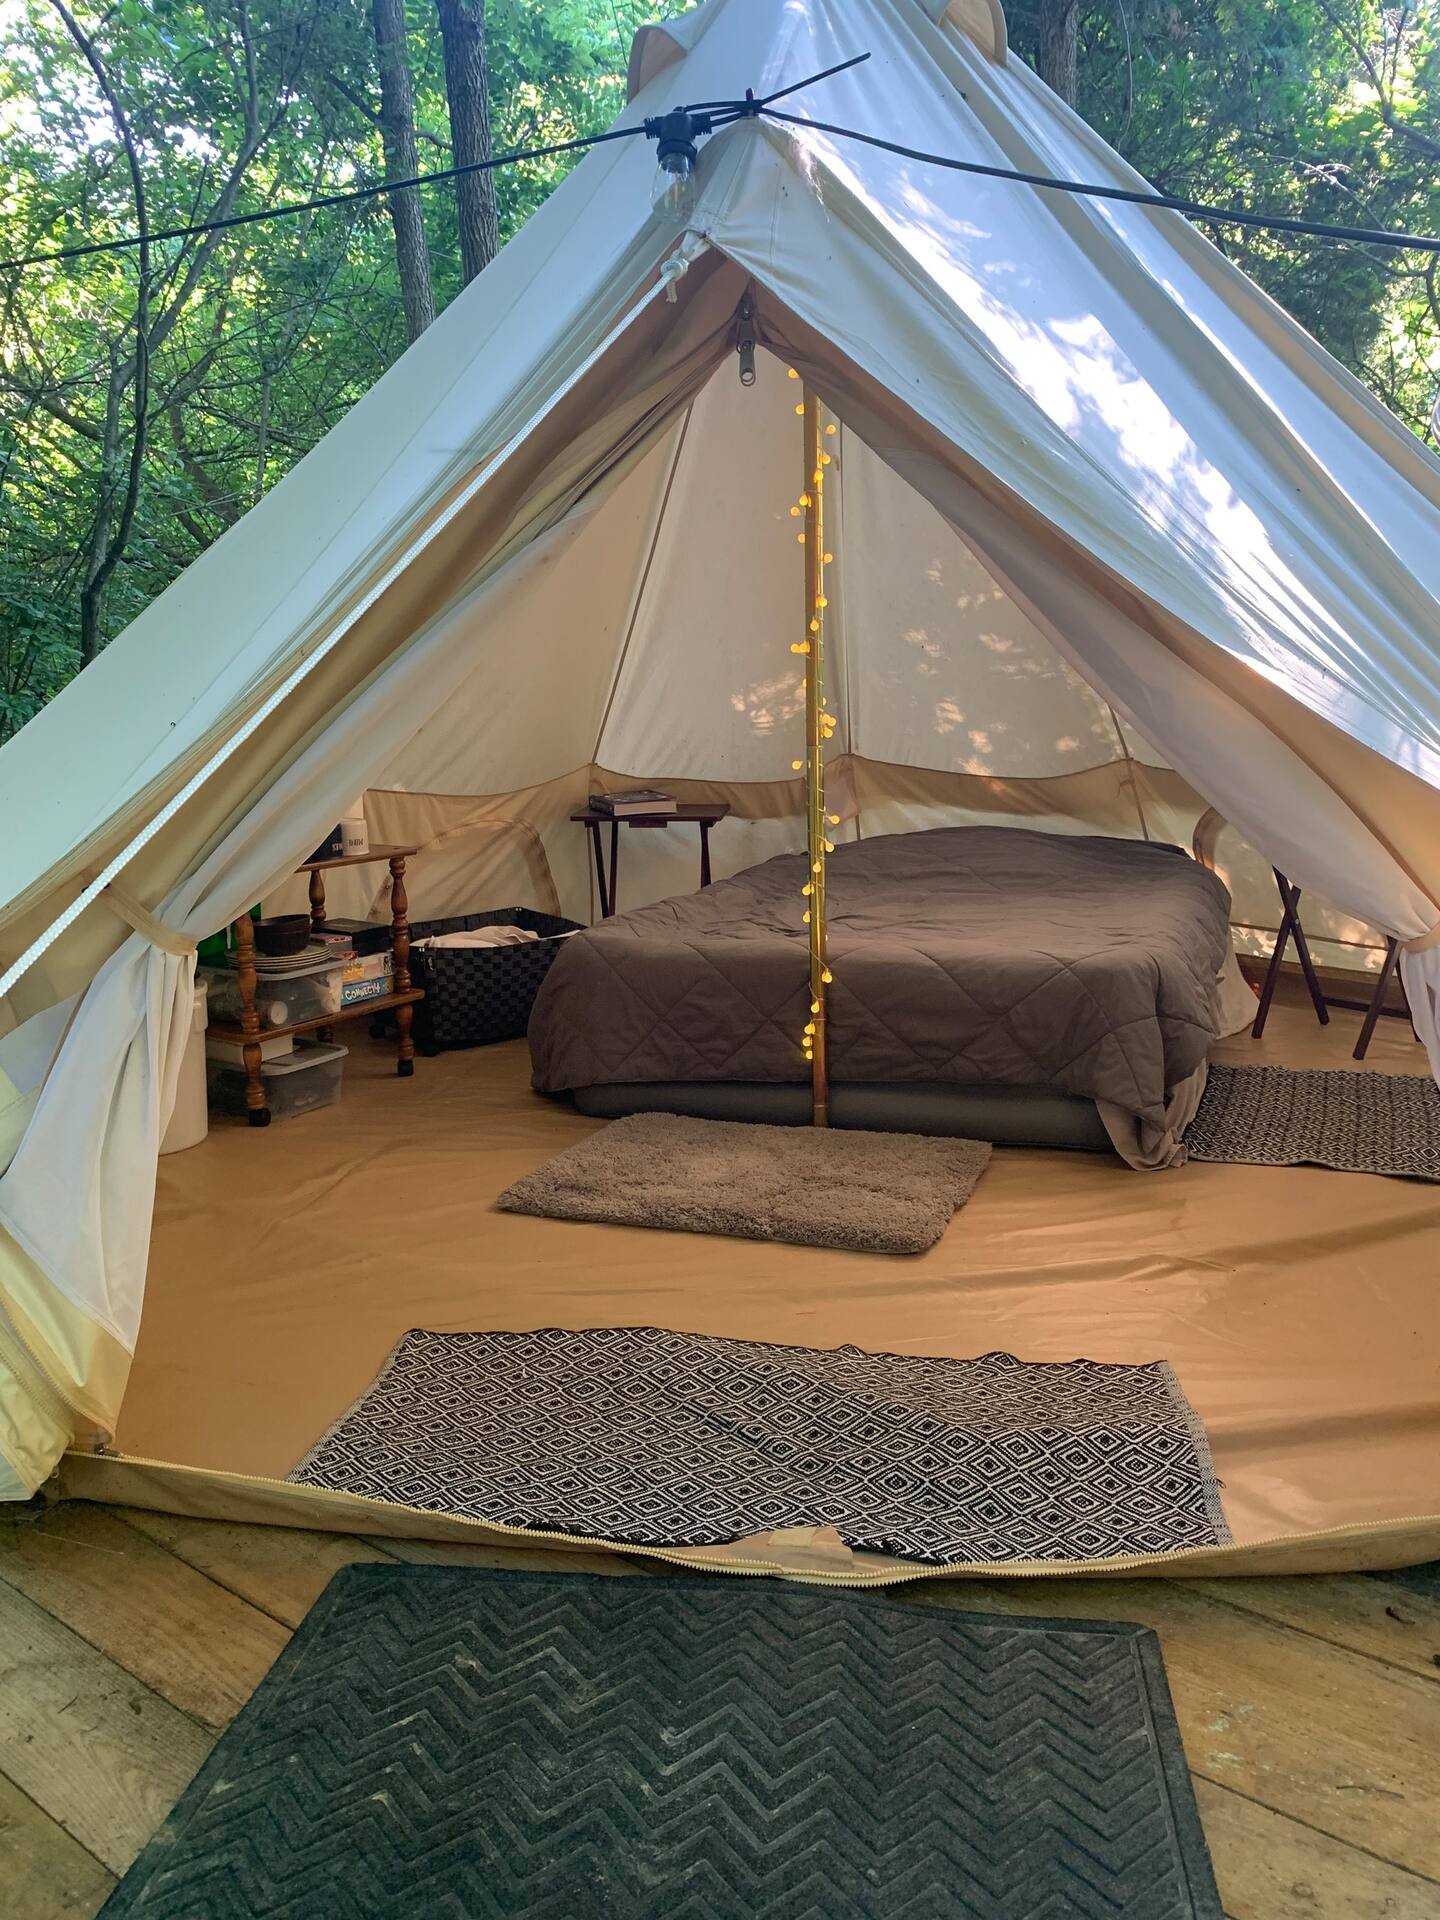 Bedroom inside a tent